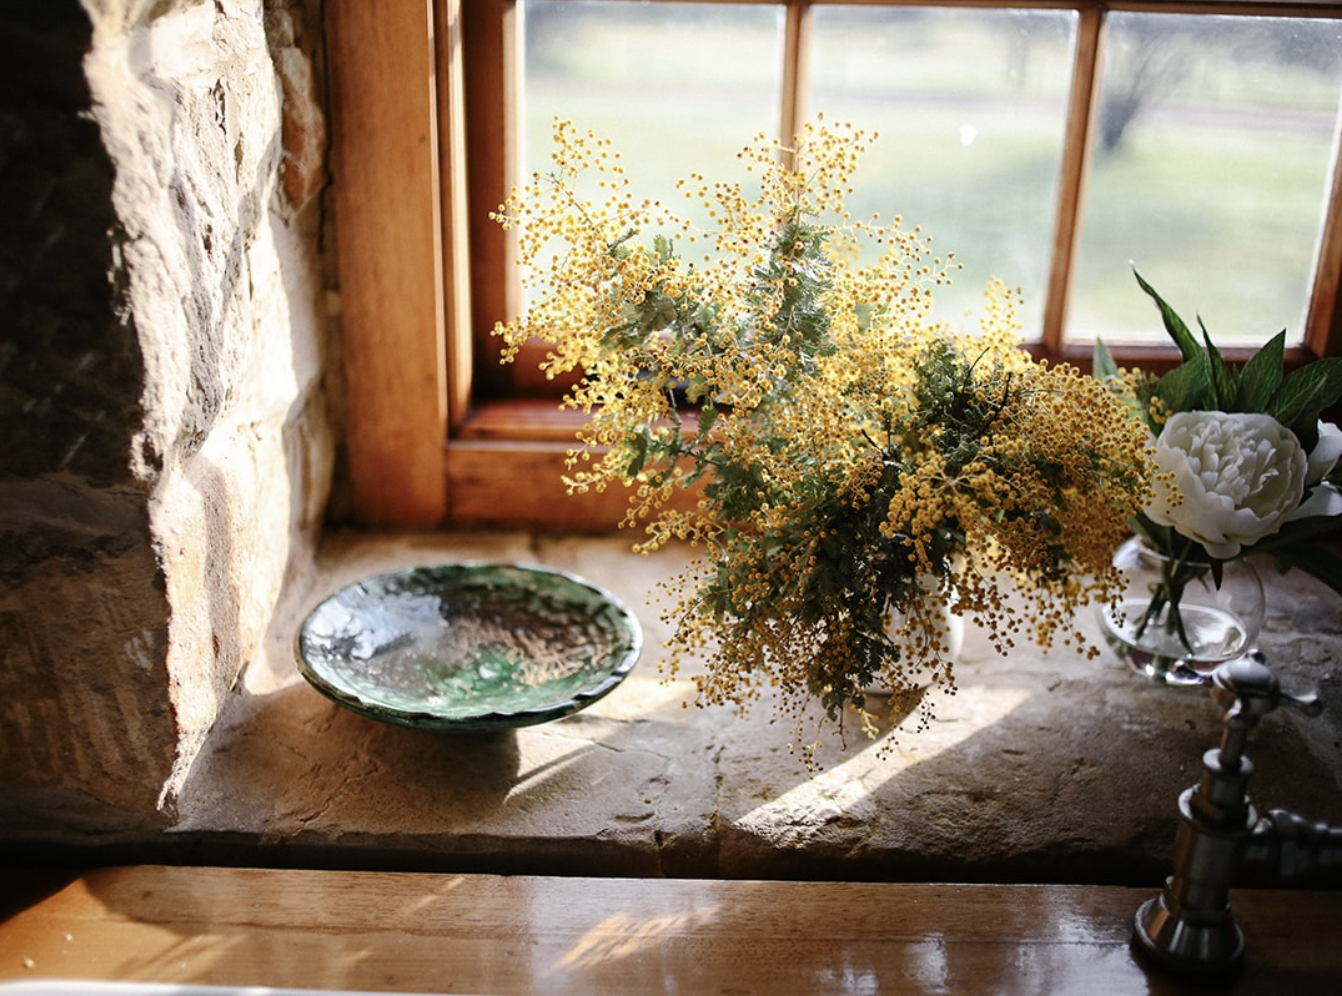 A ceramic dish and a plant sit on a windowsill.